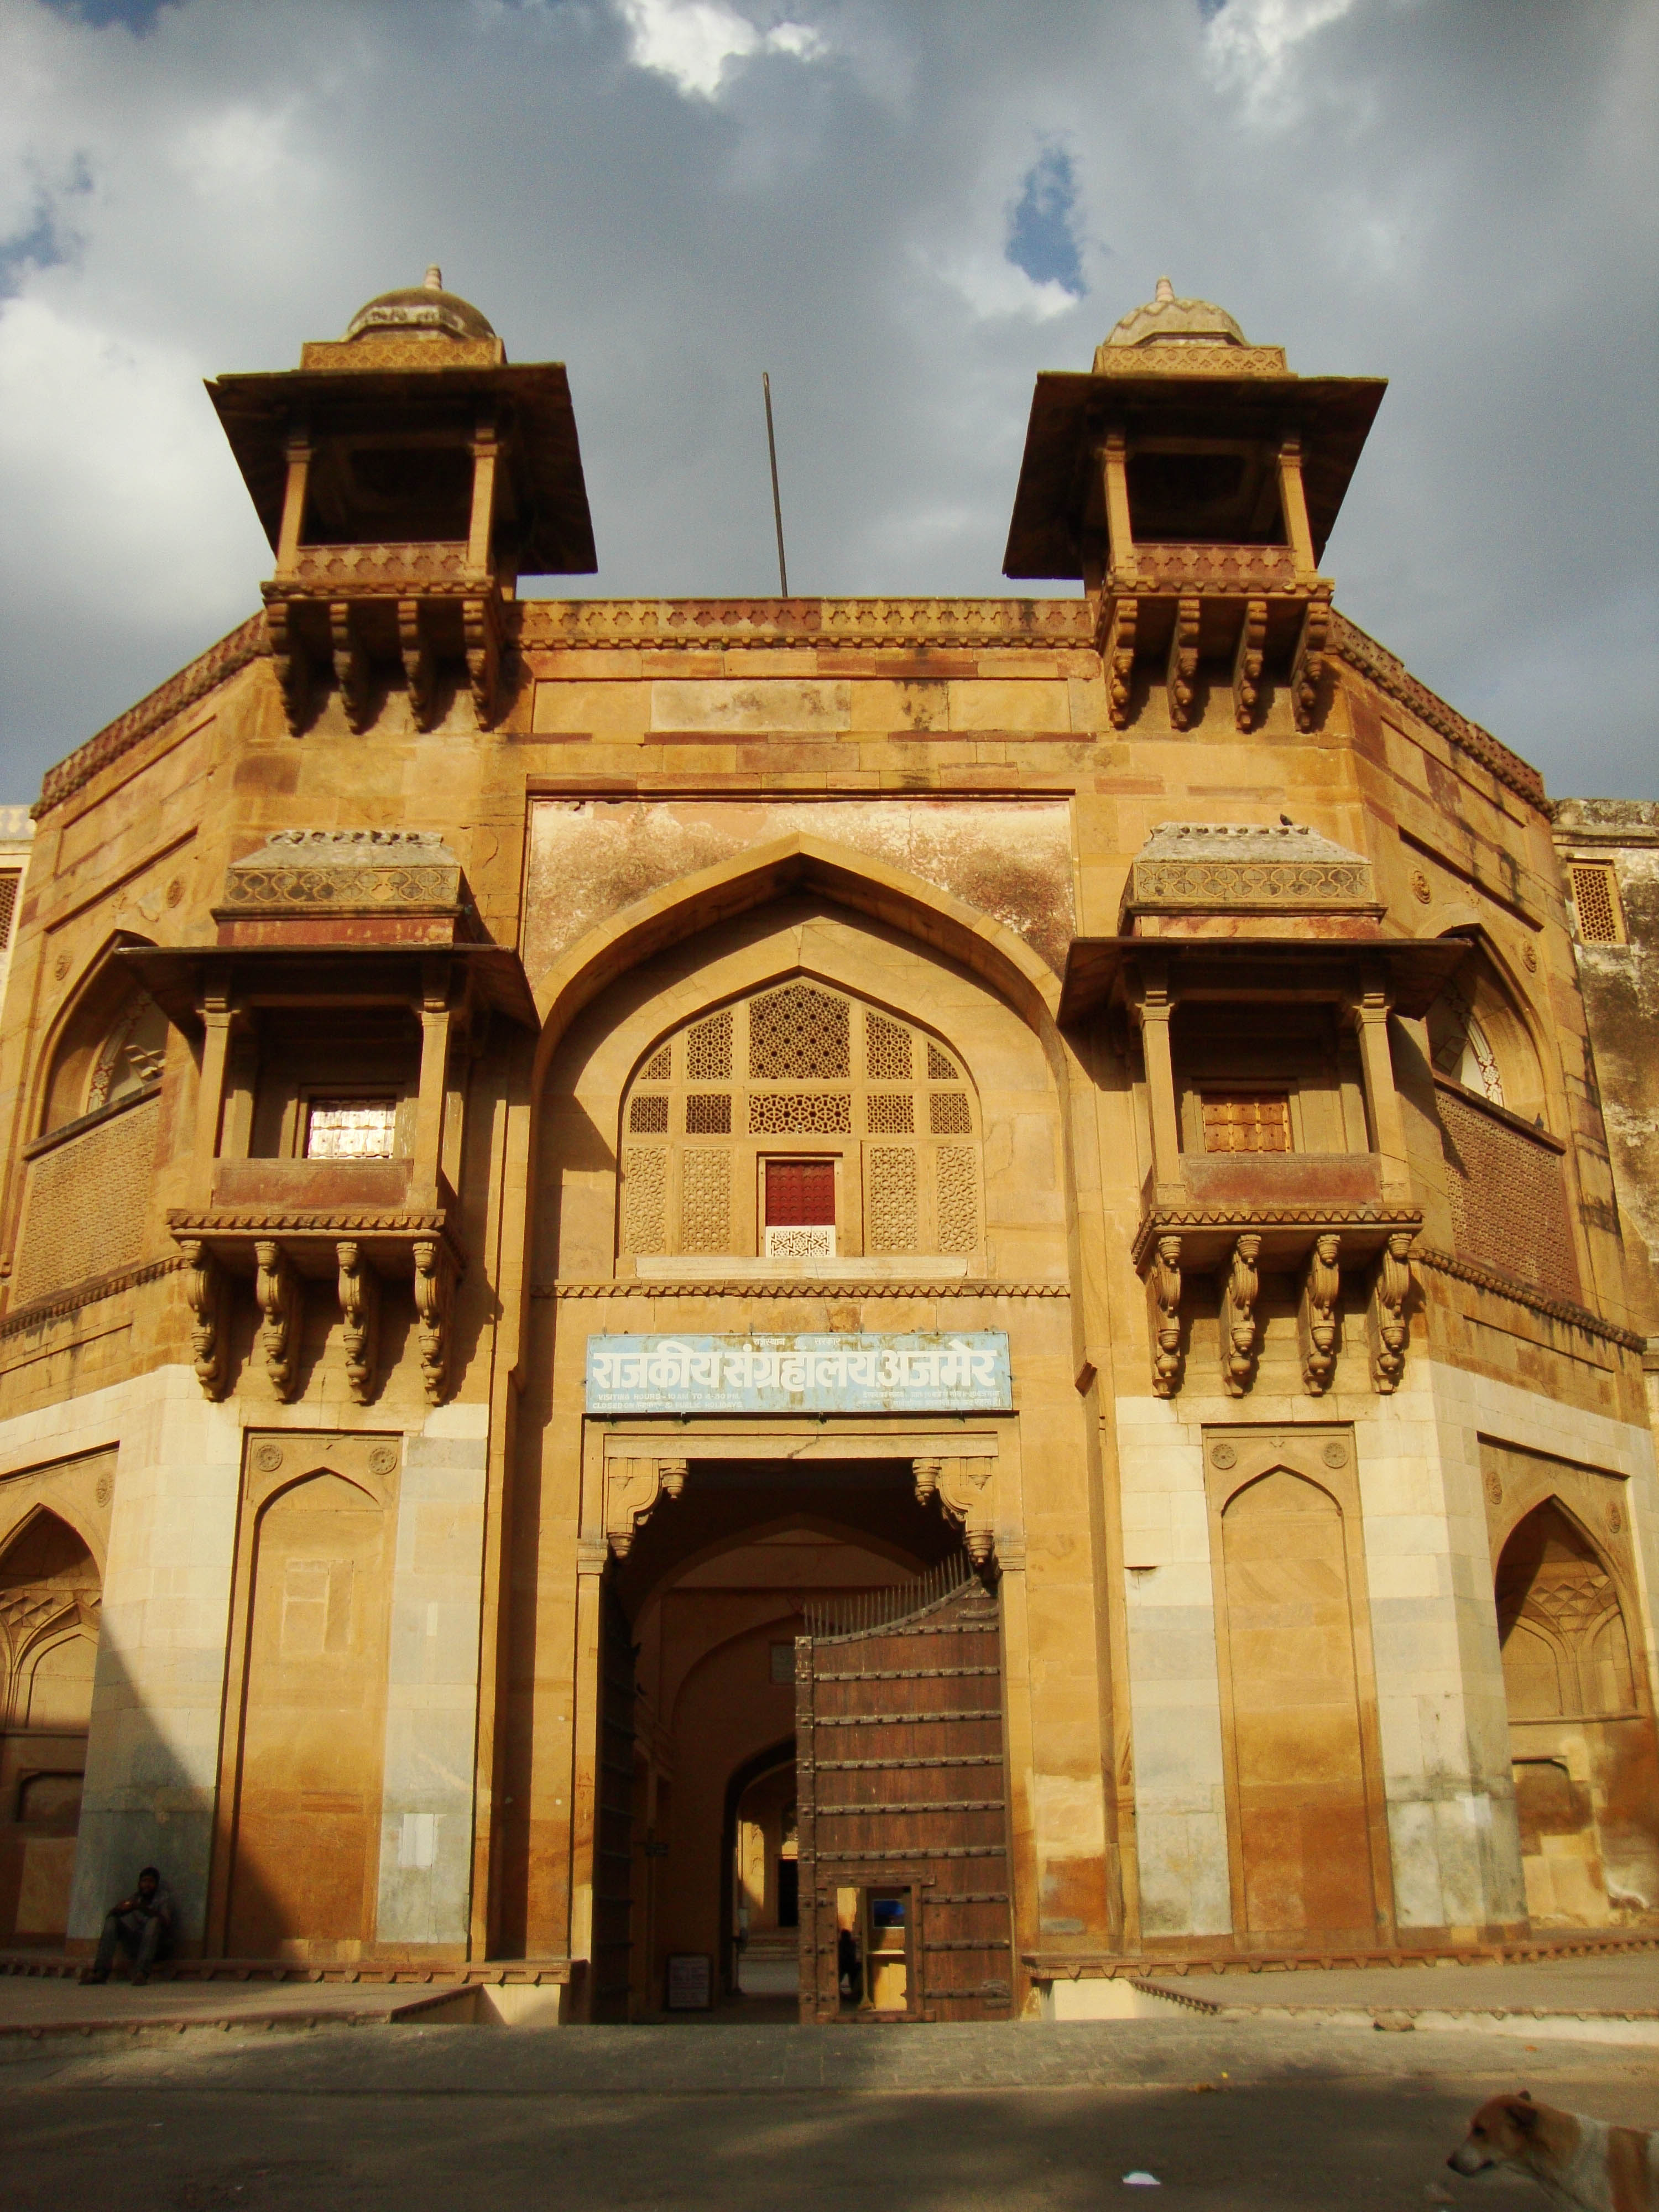 Akbari Fort & Museum - Wikipedia